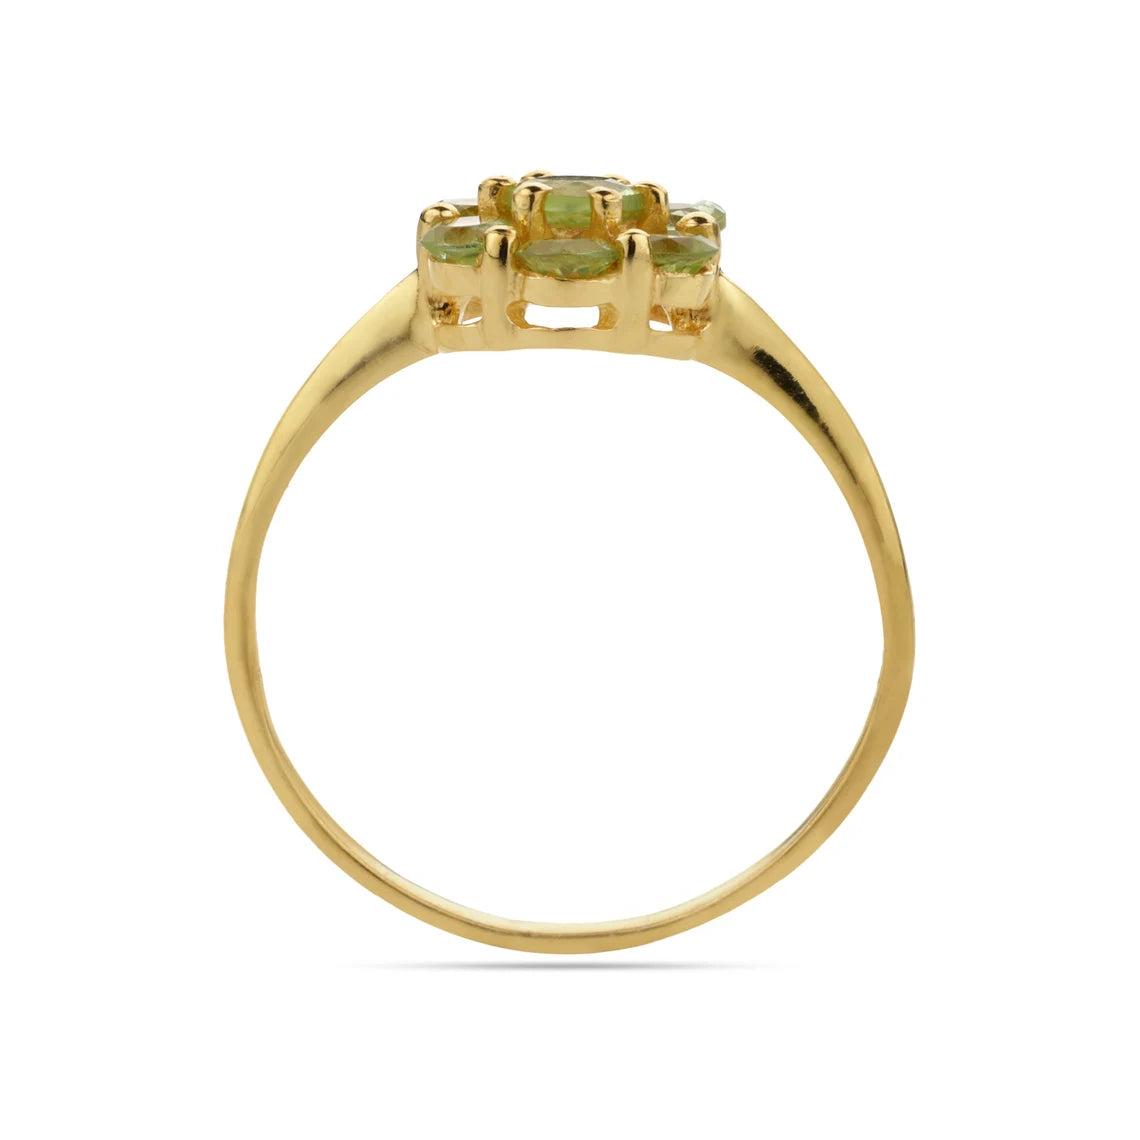 Handmade Sterling Silver Ring,-18k Gold Plated - Green Peridot Ring, Natural Peridot August Birthstone, Dainty Minimalist Women’s Gifting Jewelry